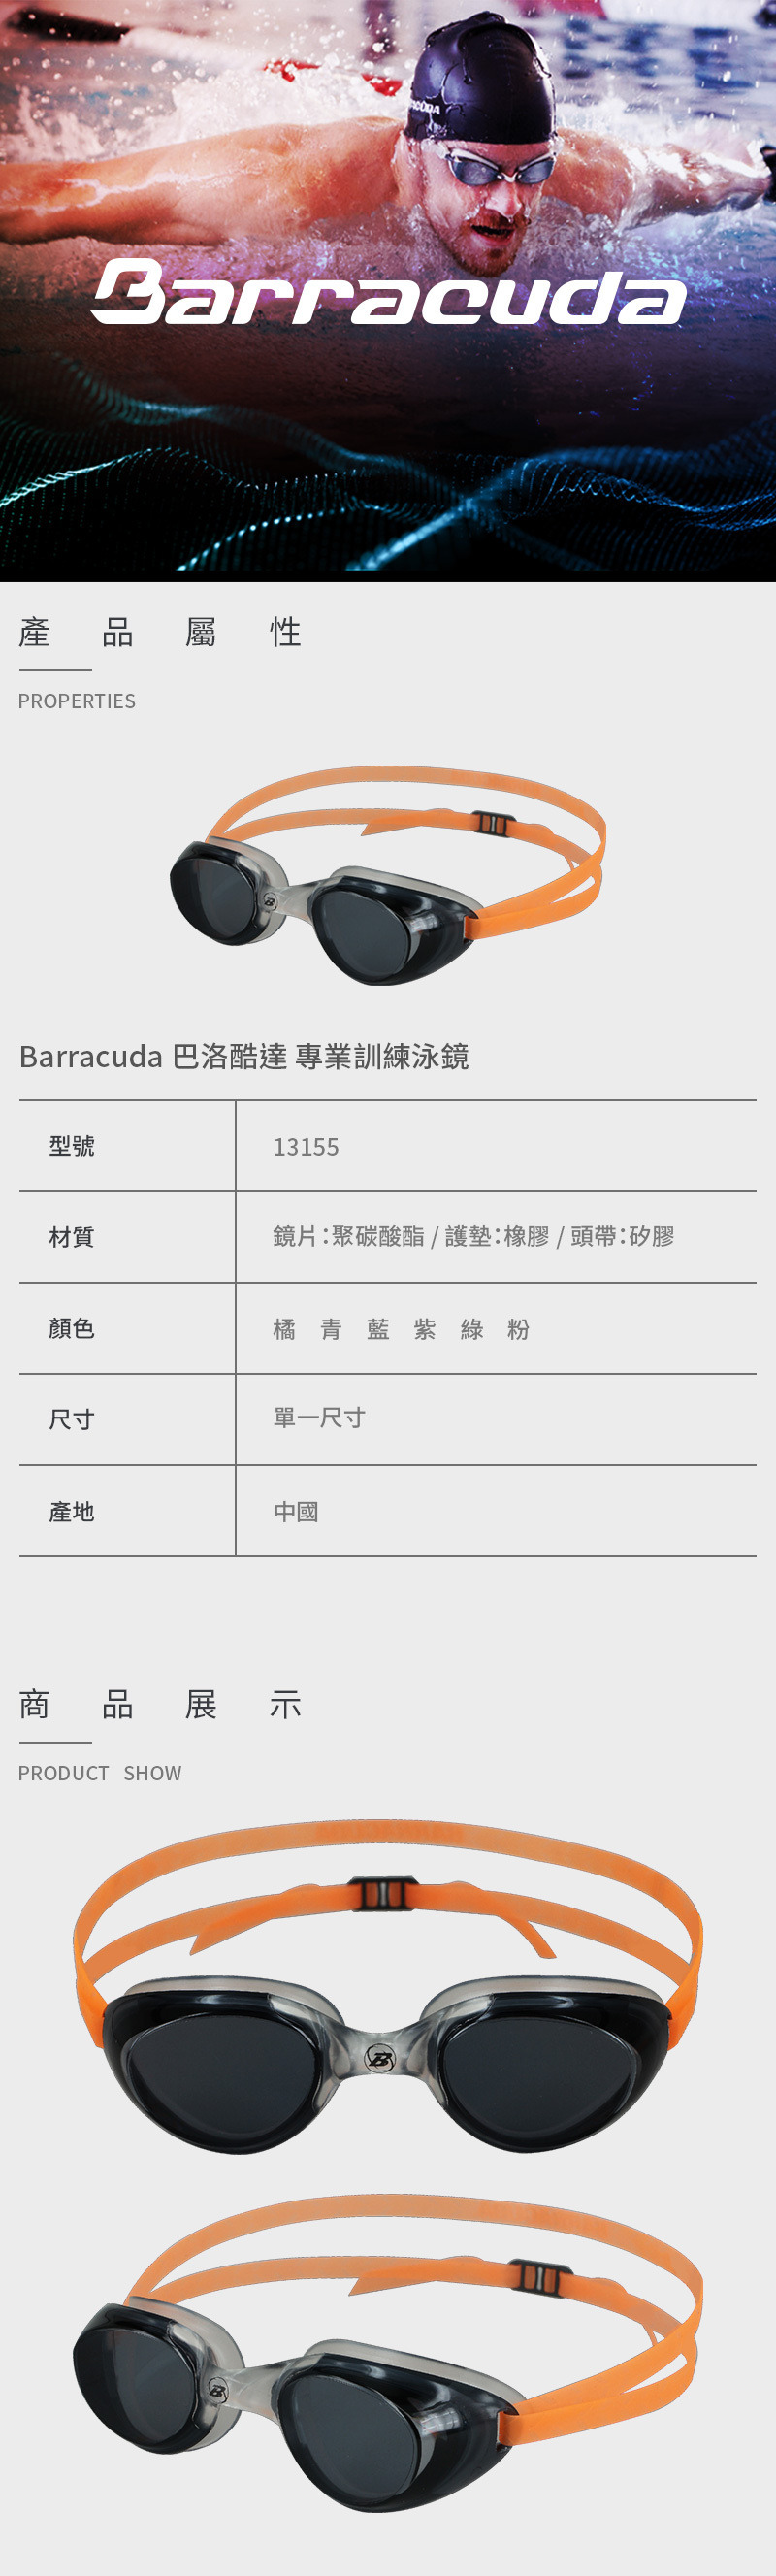 【Barracuda 巴洛酷達】專業訓練泳鏡 13155